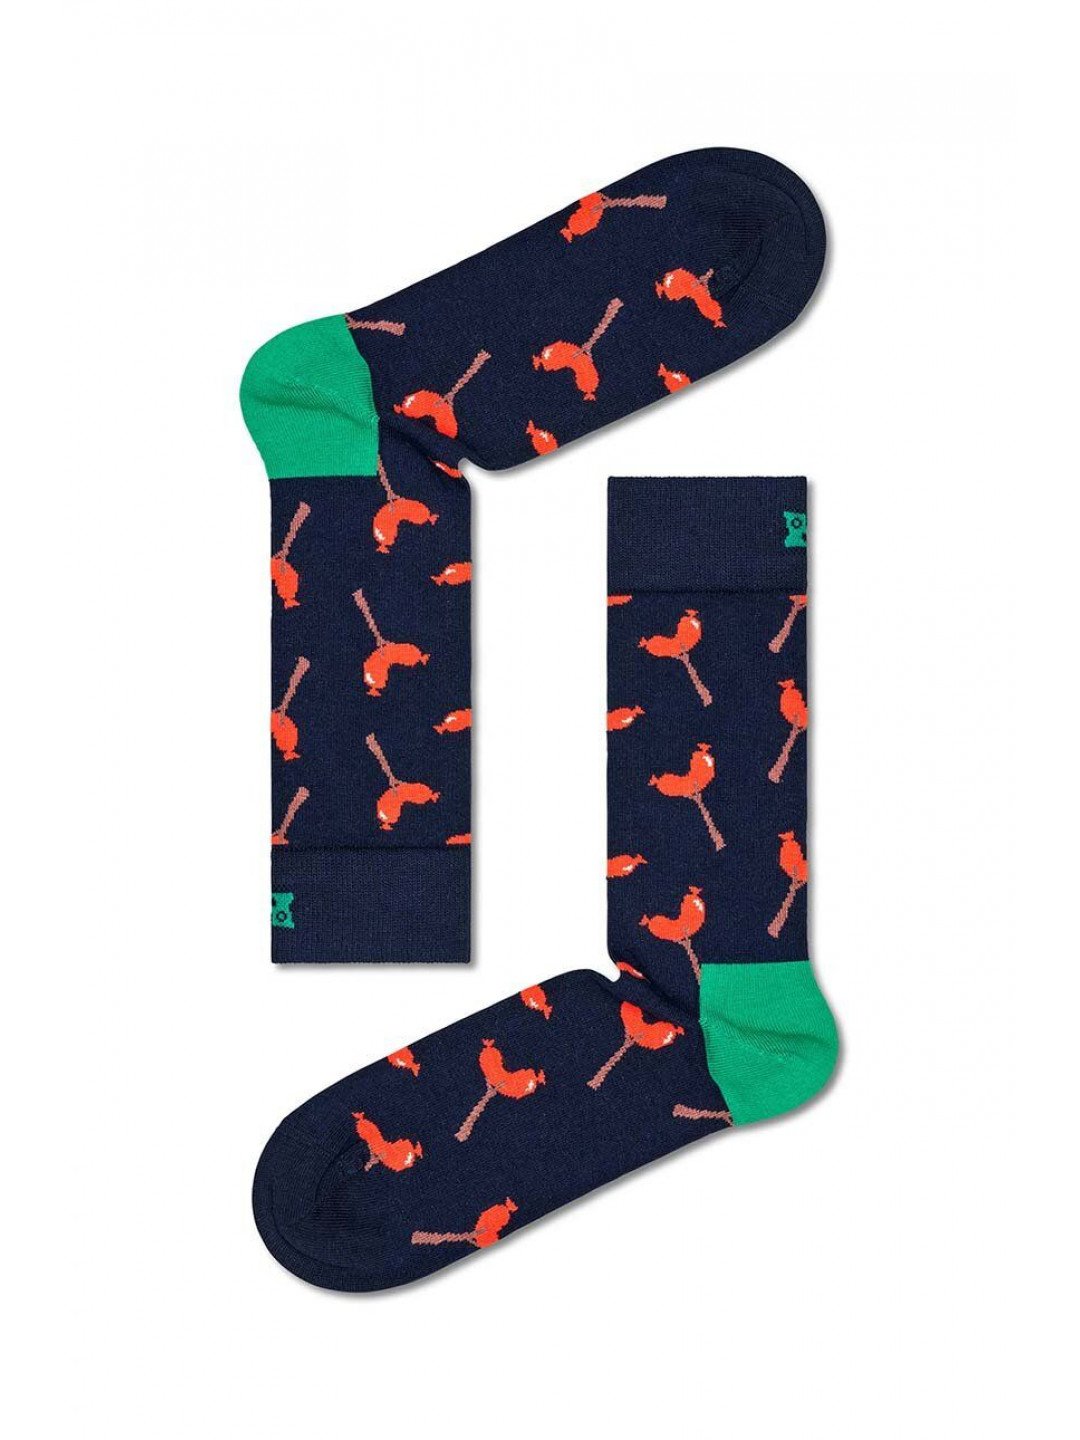 Ponožky Happy Socks Sausage Sock tmavomodrá barva